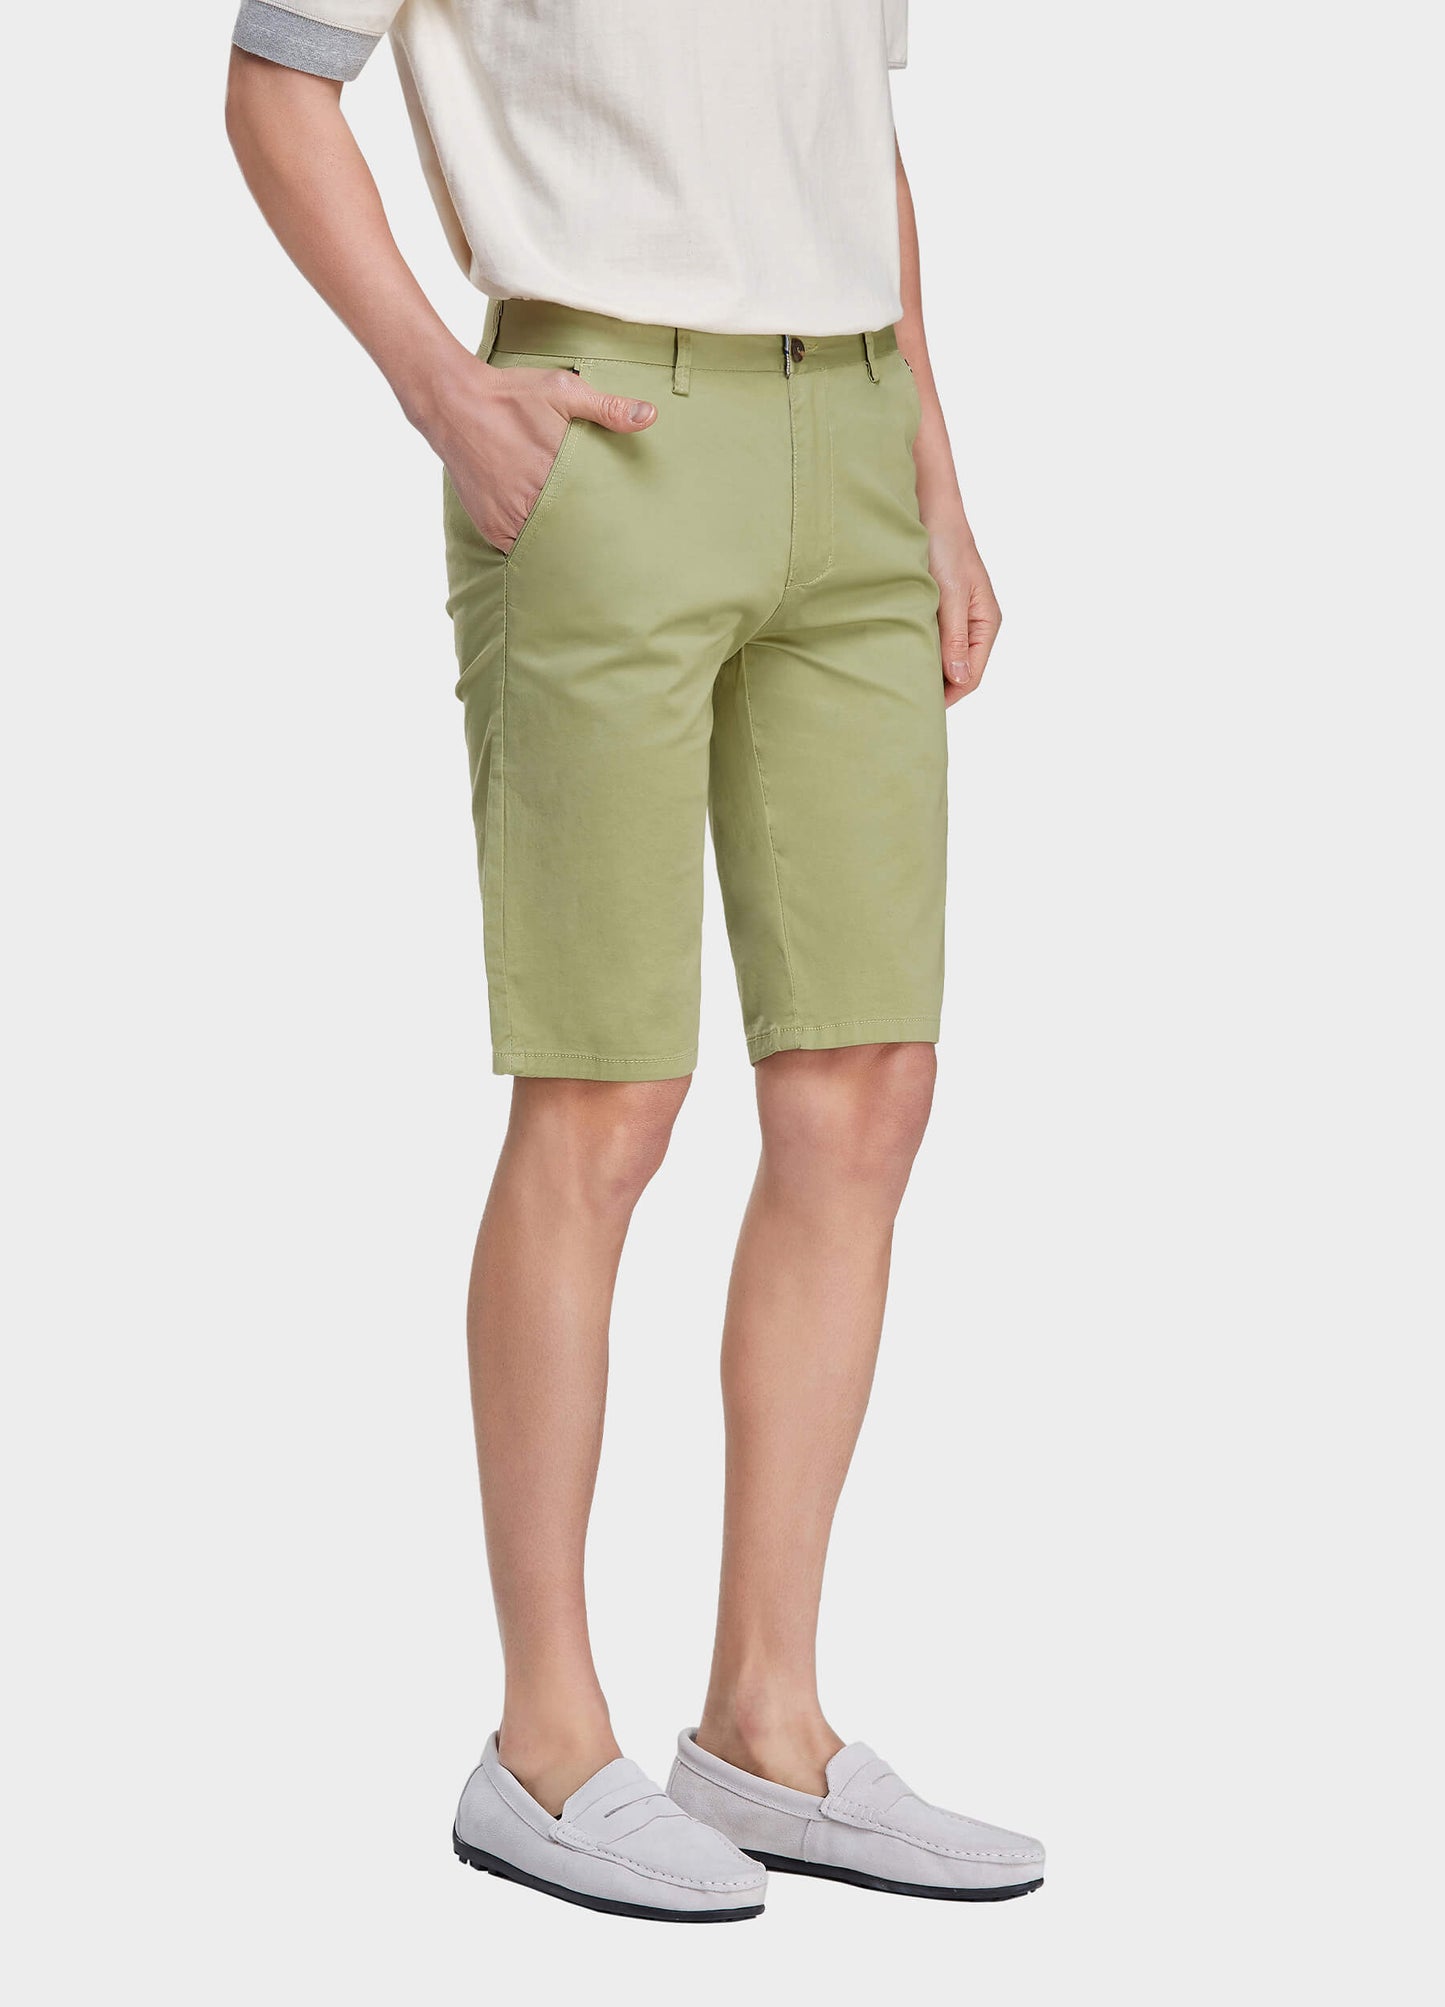 Men's Casual Button Closure Zipper Elasticity Solid Shorts with Slant Pocket-Green